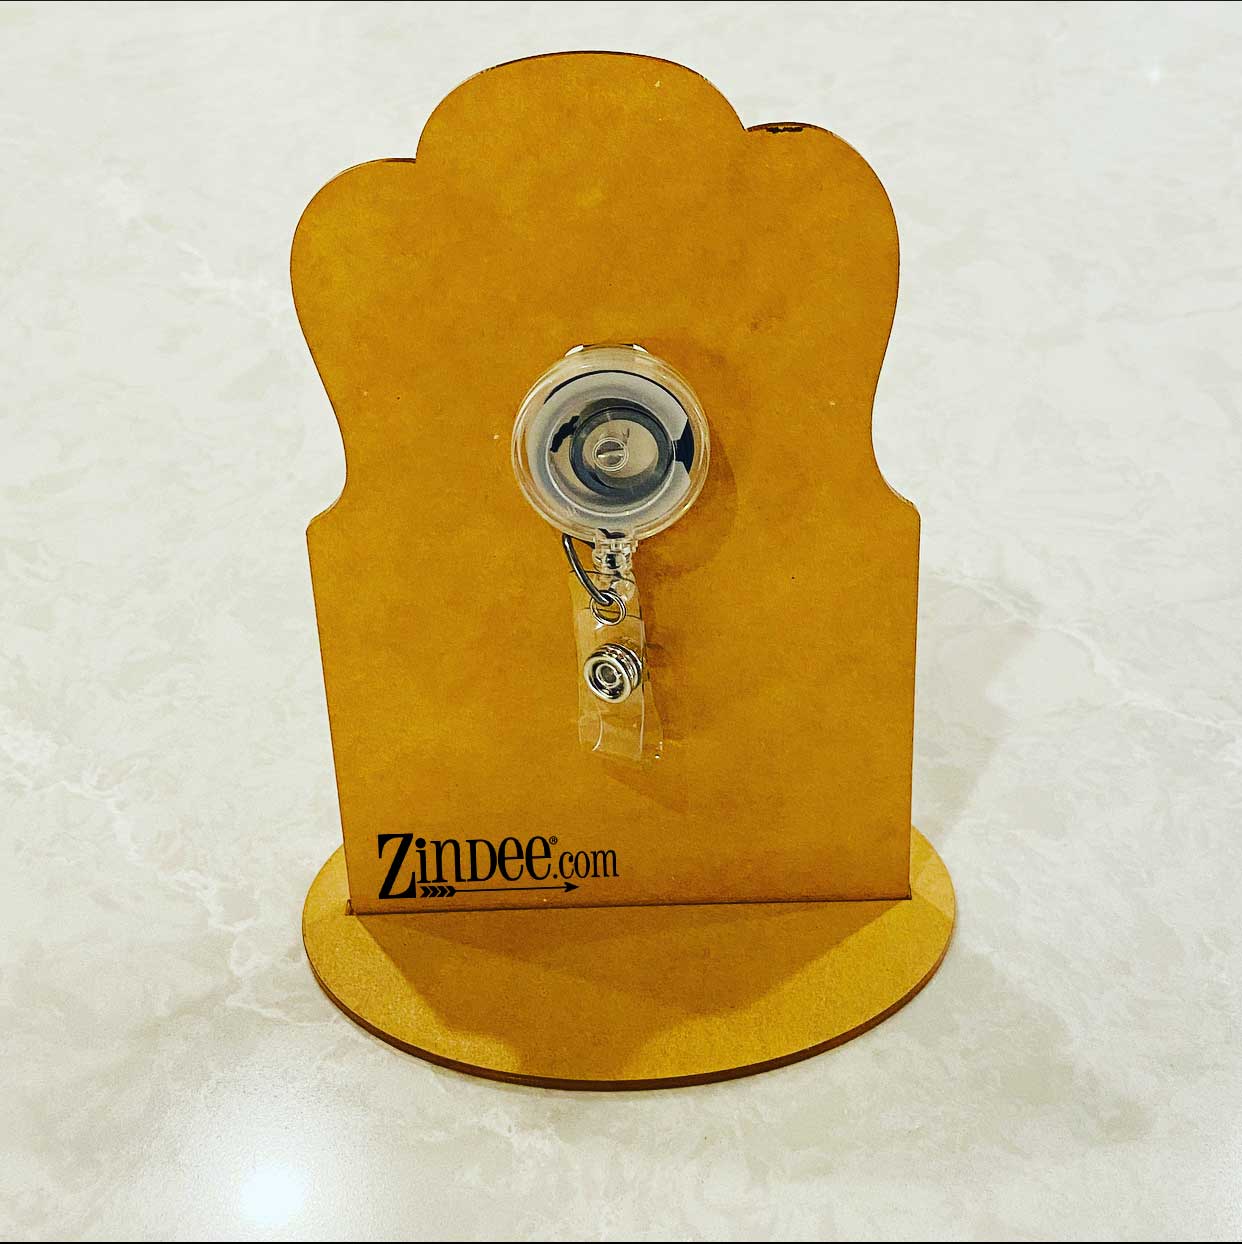 Shaker acrylics! Shaker badge reels… supplies found at zindee.com #sh, badge  reels